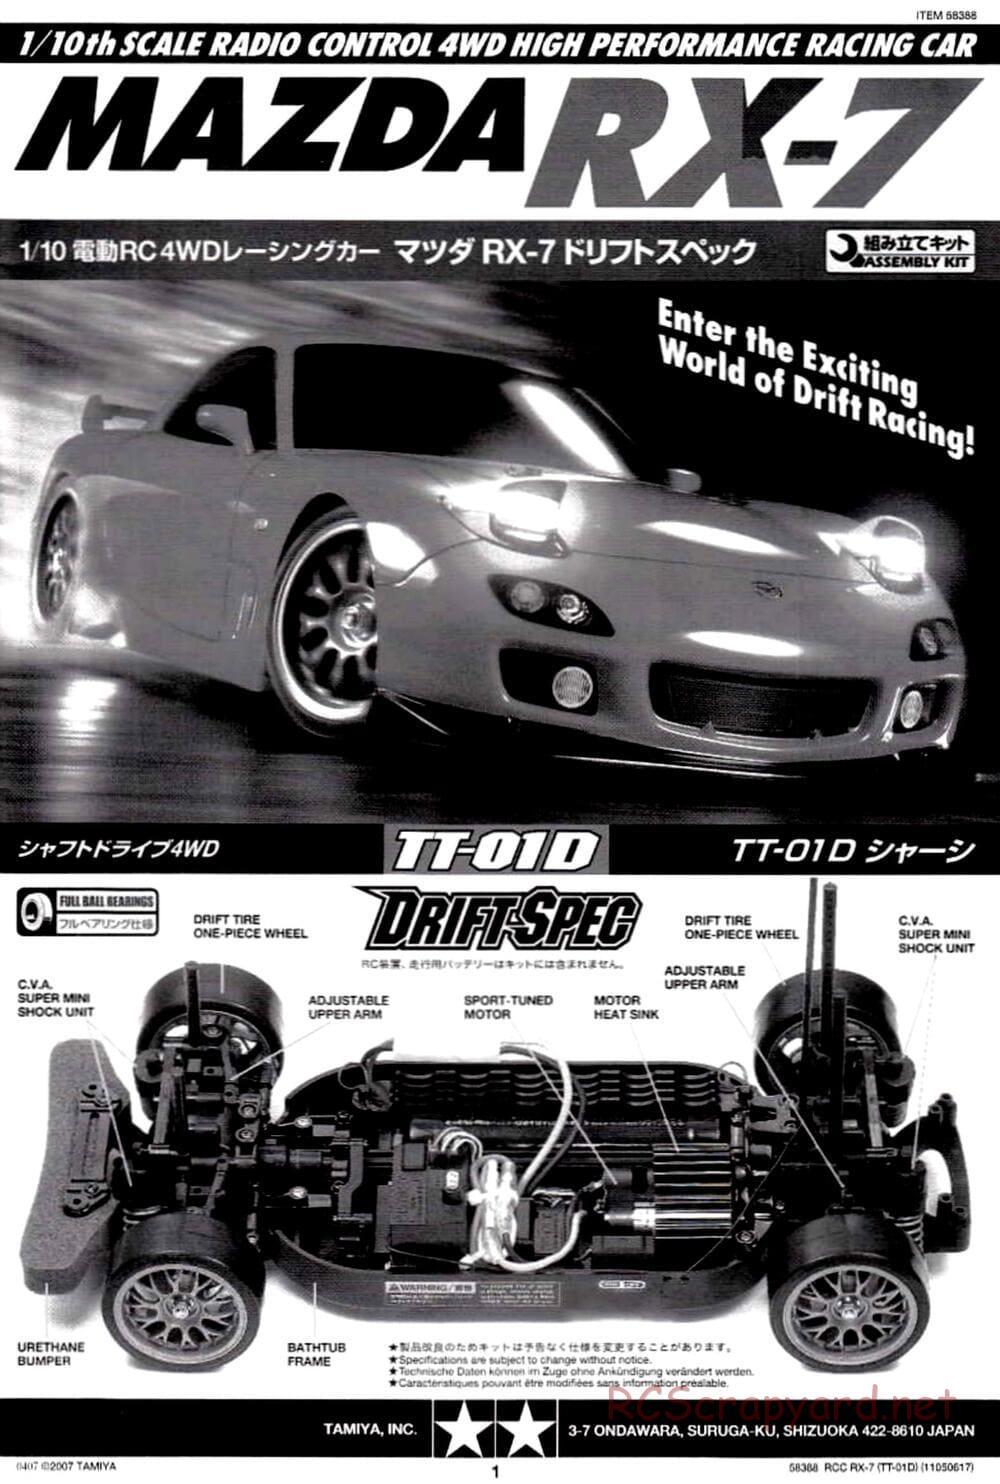 Tamiya - Mazda RX-7 - Drift Spec - TT-01D Chassis - Manual - Page 1